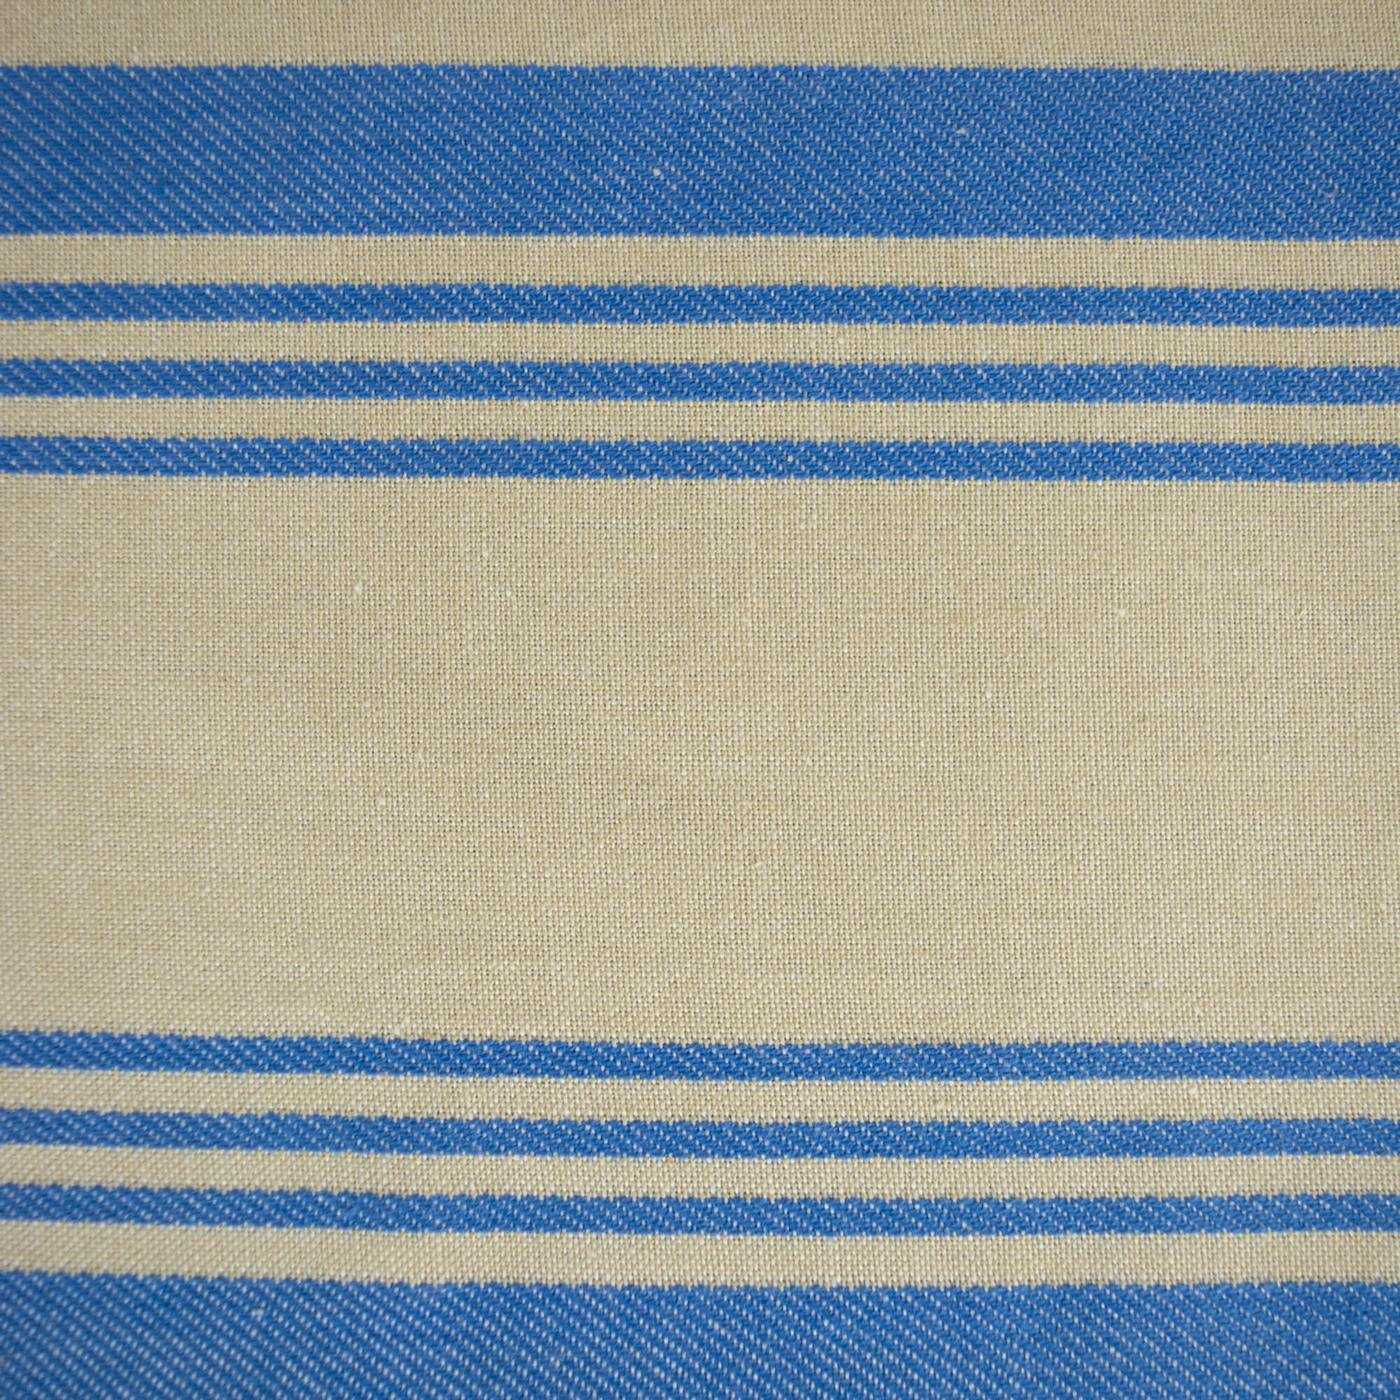 Sailor Striped Tablecloth - 52 inches square